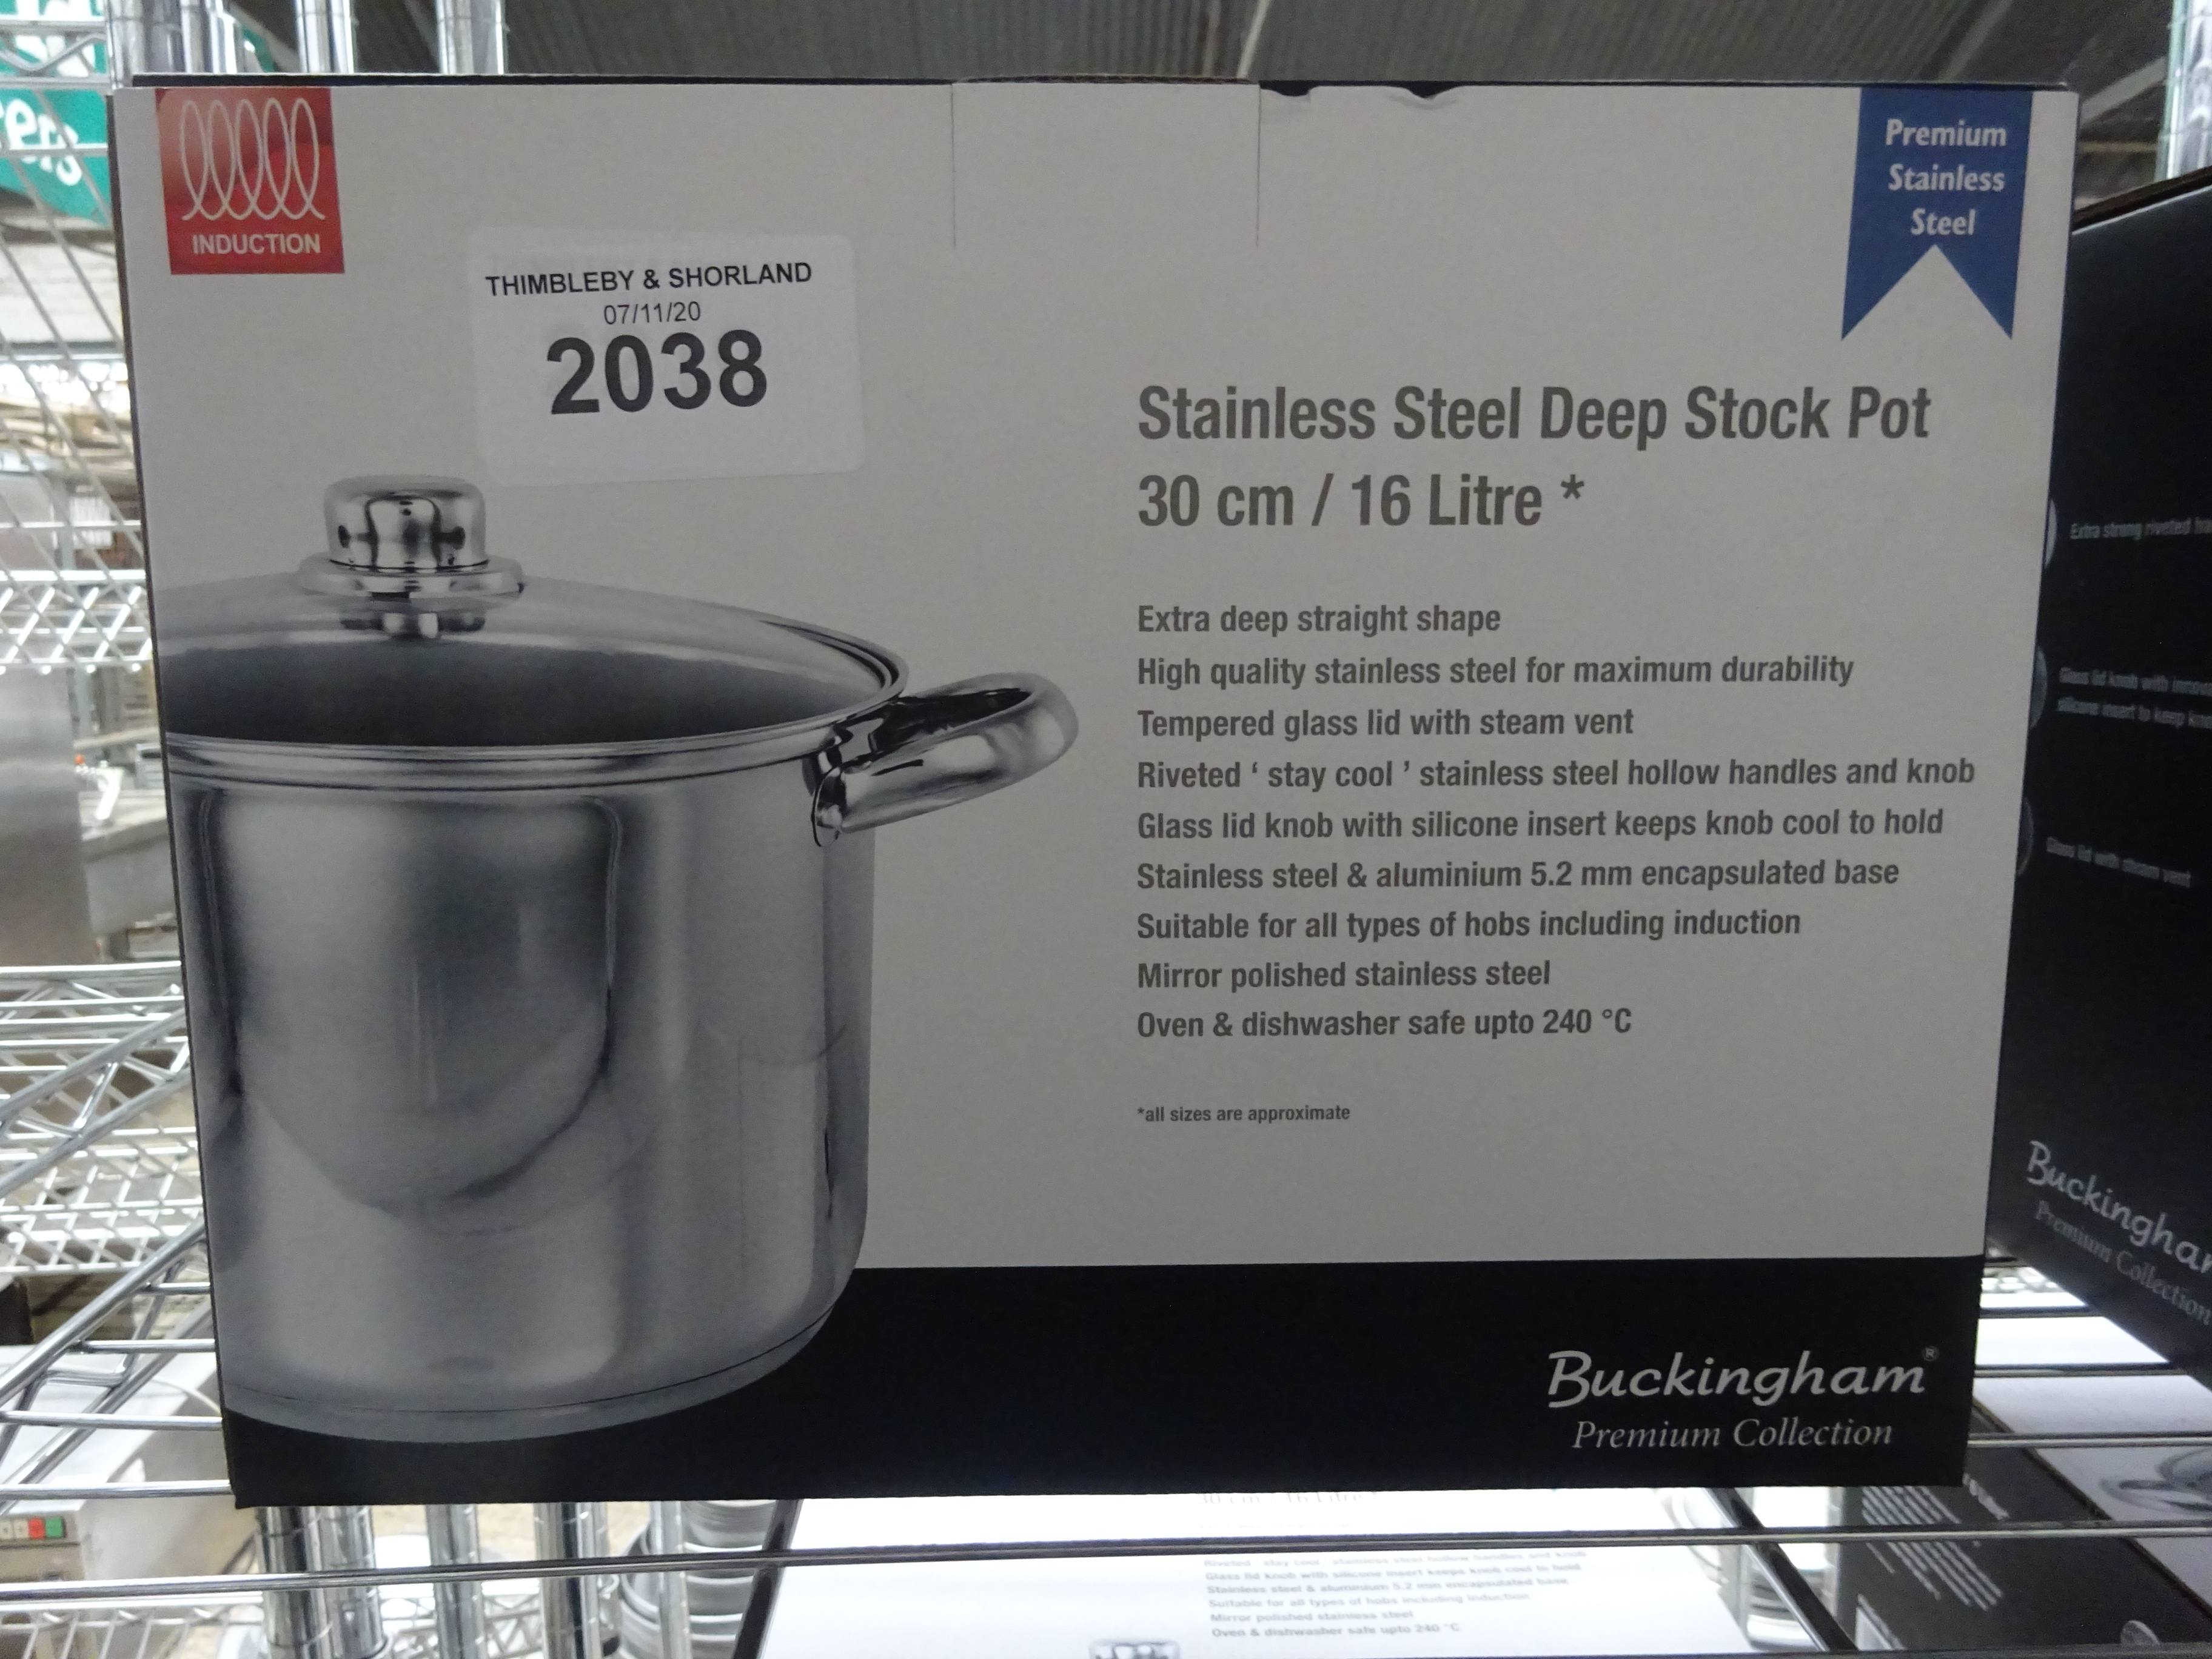 Stainless steel stock pot